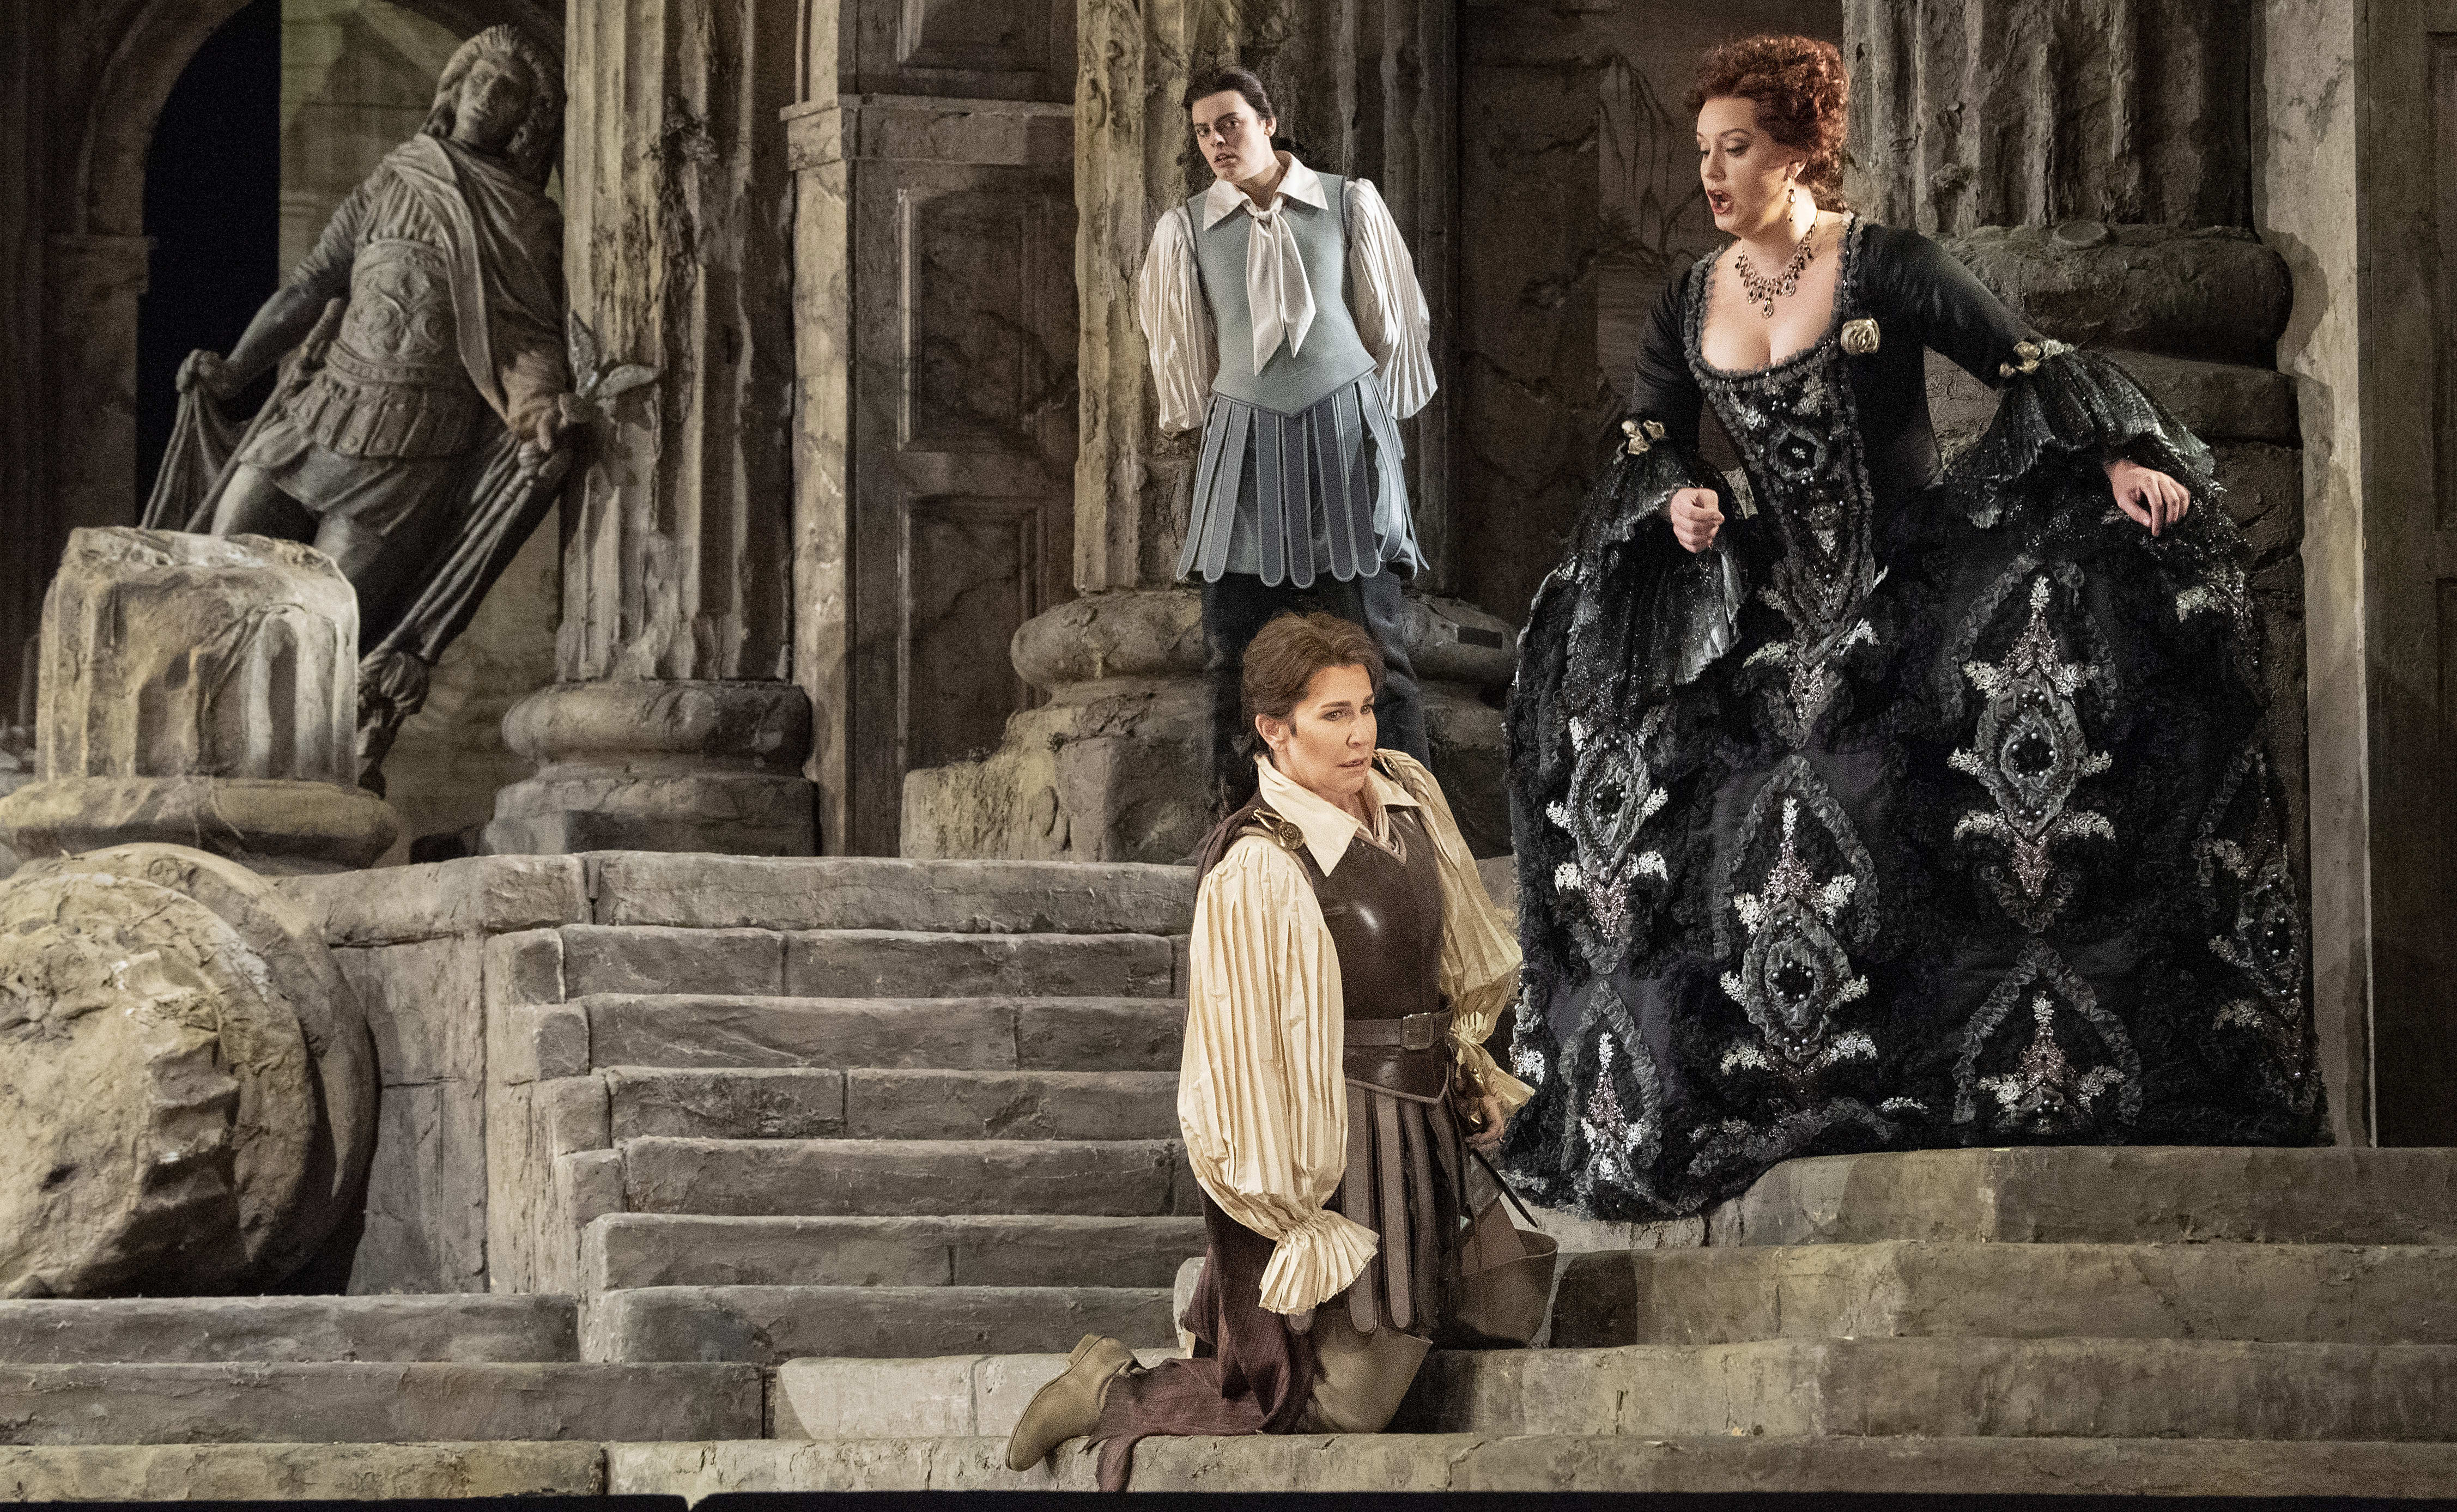 Emily D'Angelo as Annio, Joyce DiDonato  as Sesto, and Elza van den Heever as Vitellia at The Met